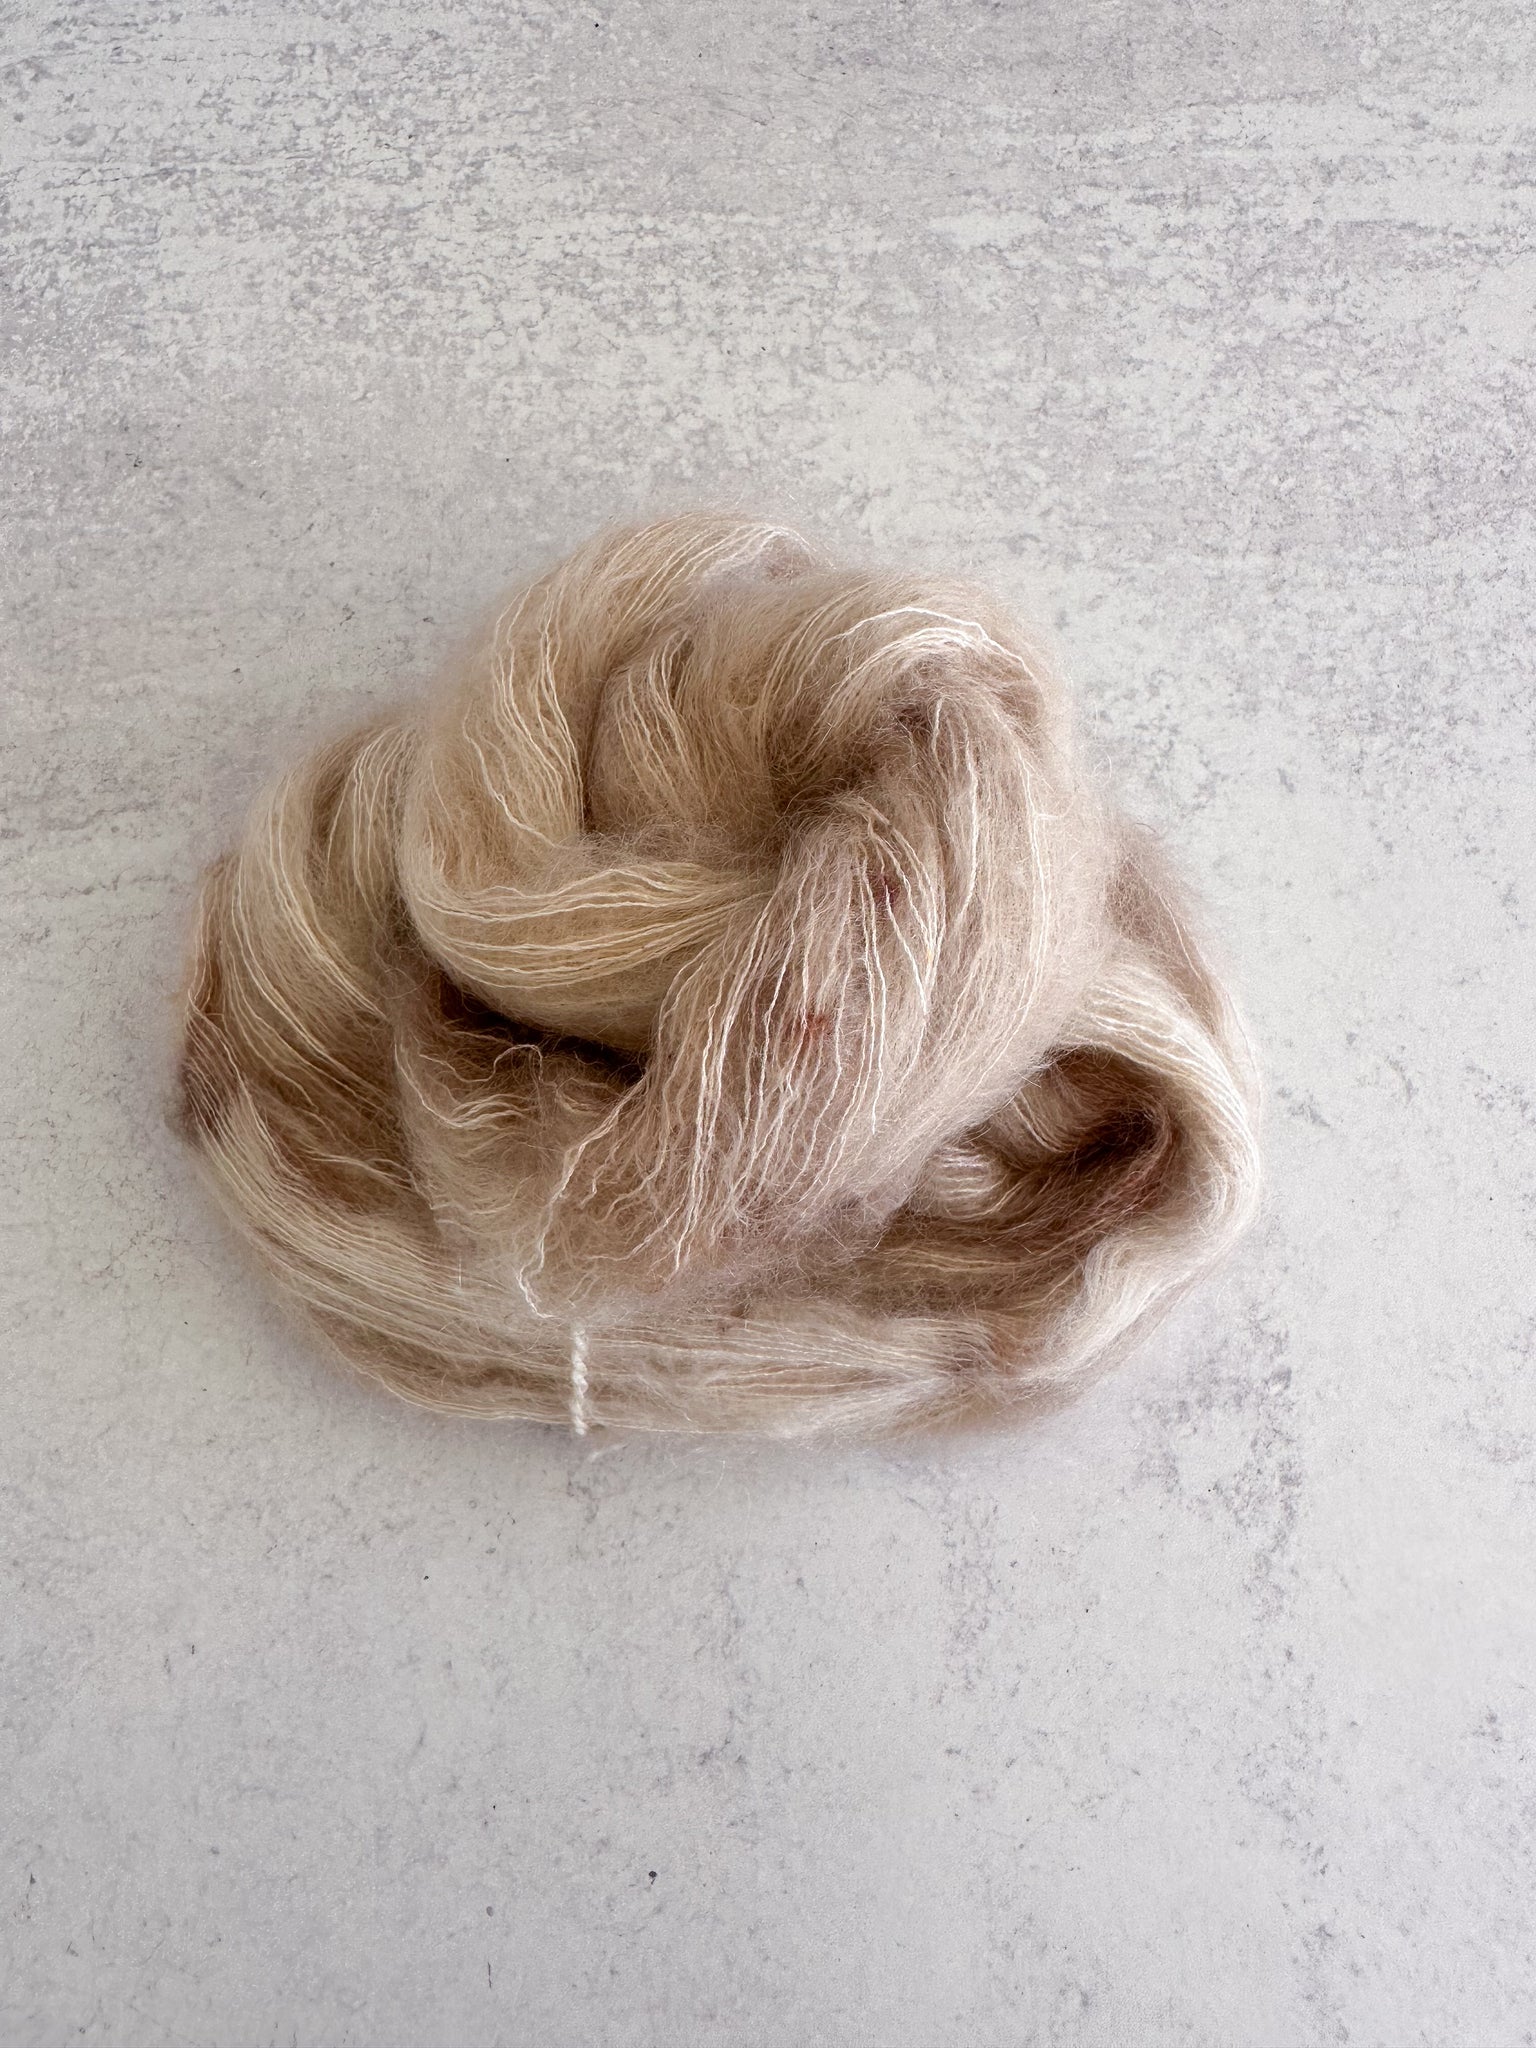 Toasted Marshmallow Mohair Silk Yarn – Republica Unicornia